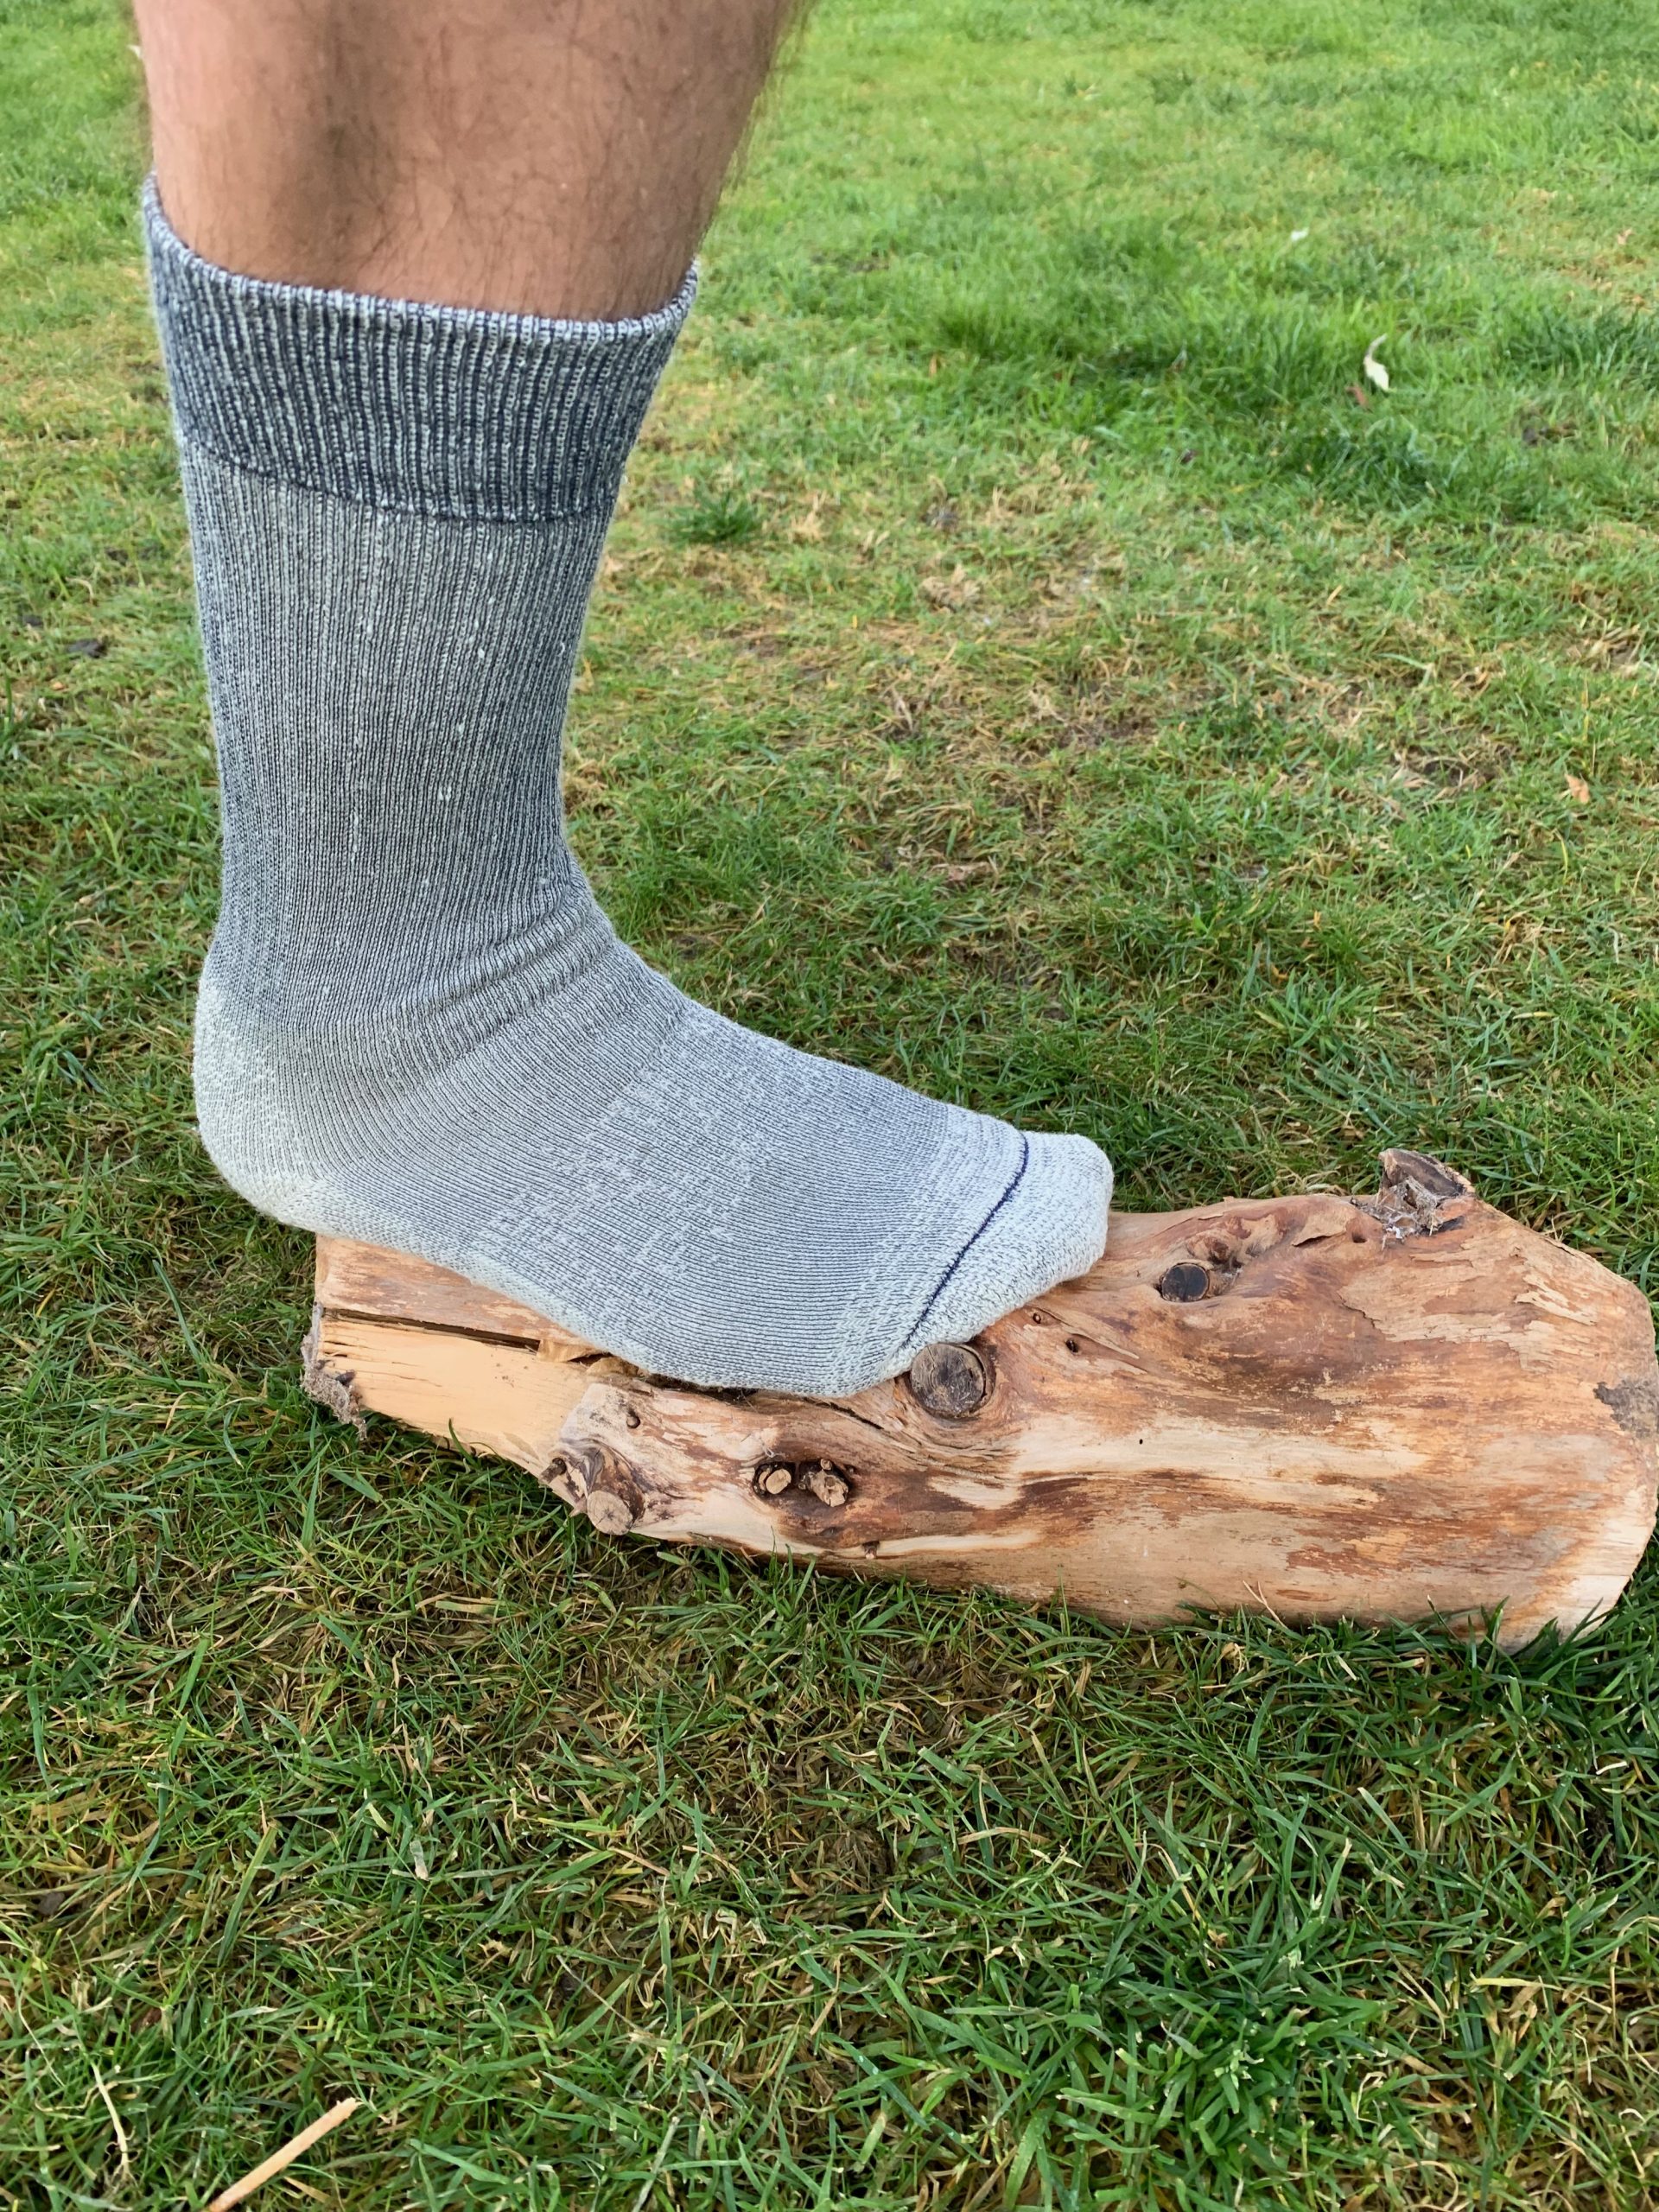 Stravaiger Merino Midweight Hiking Socks UK - Made in Scotland